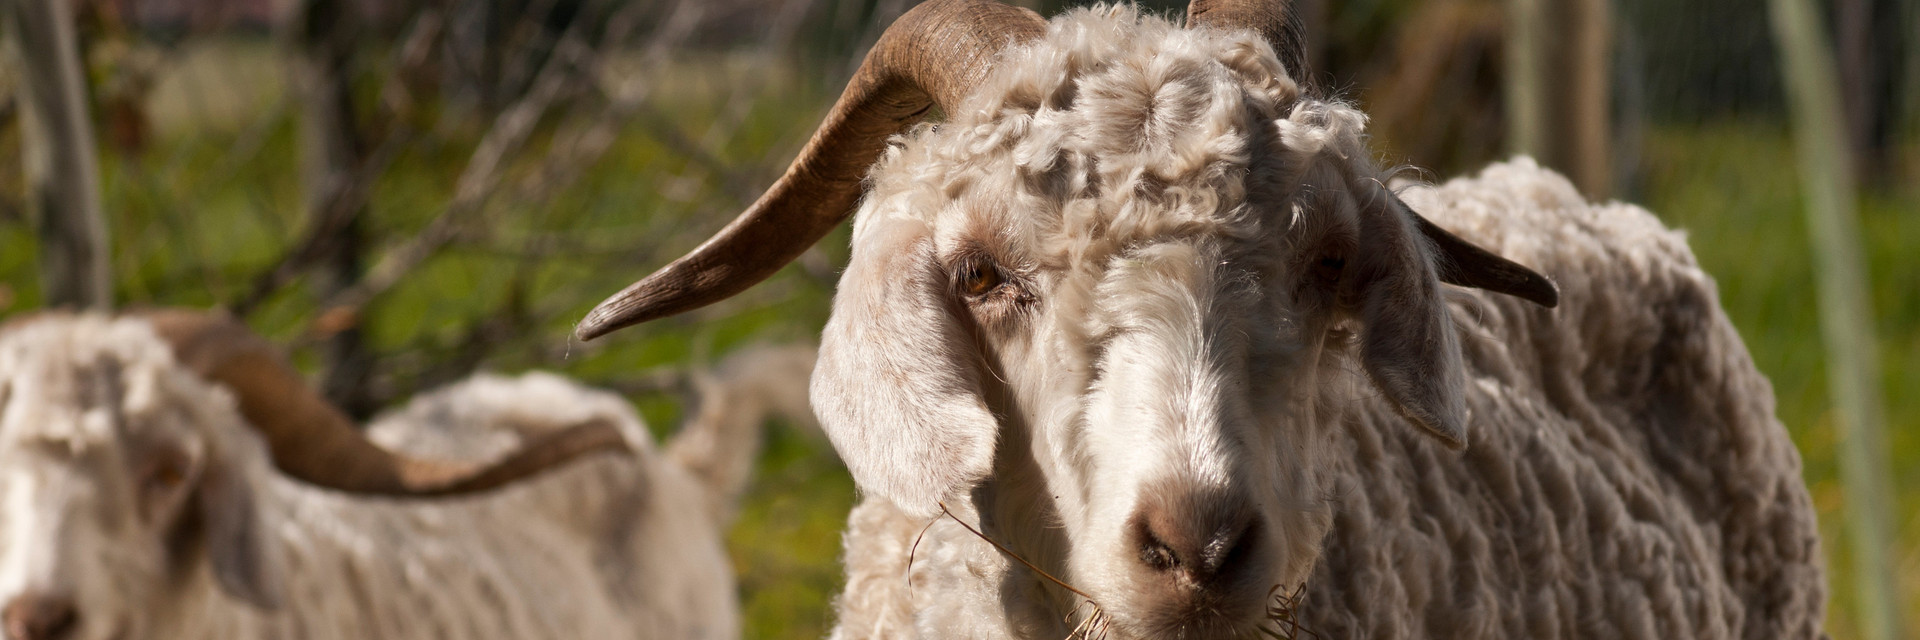 Mutilation of Goats - FOUR PAWS International - Animal Welfare Organisation